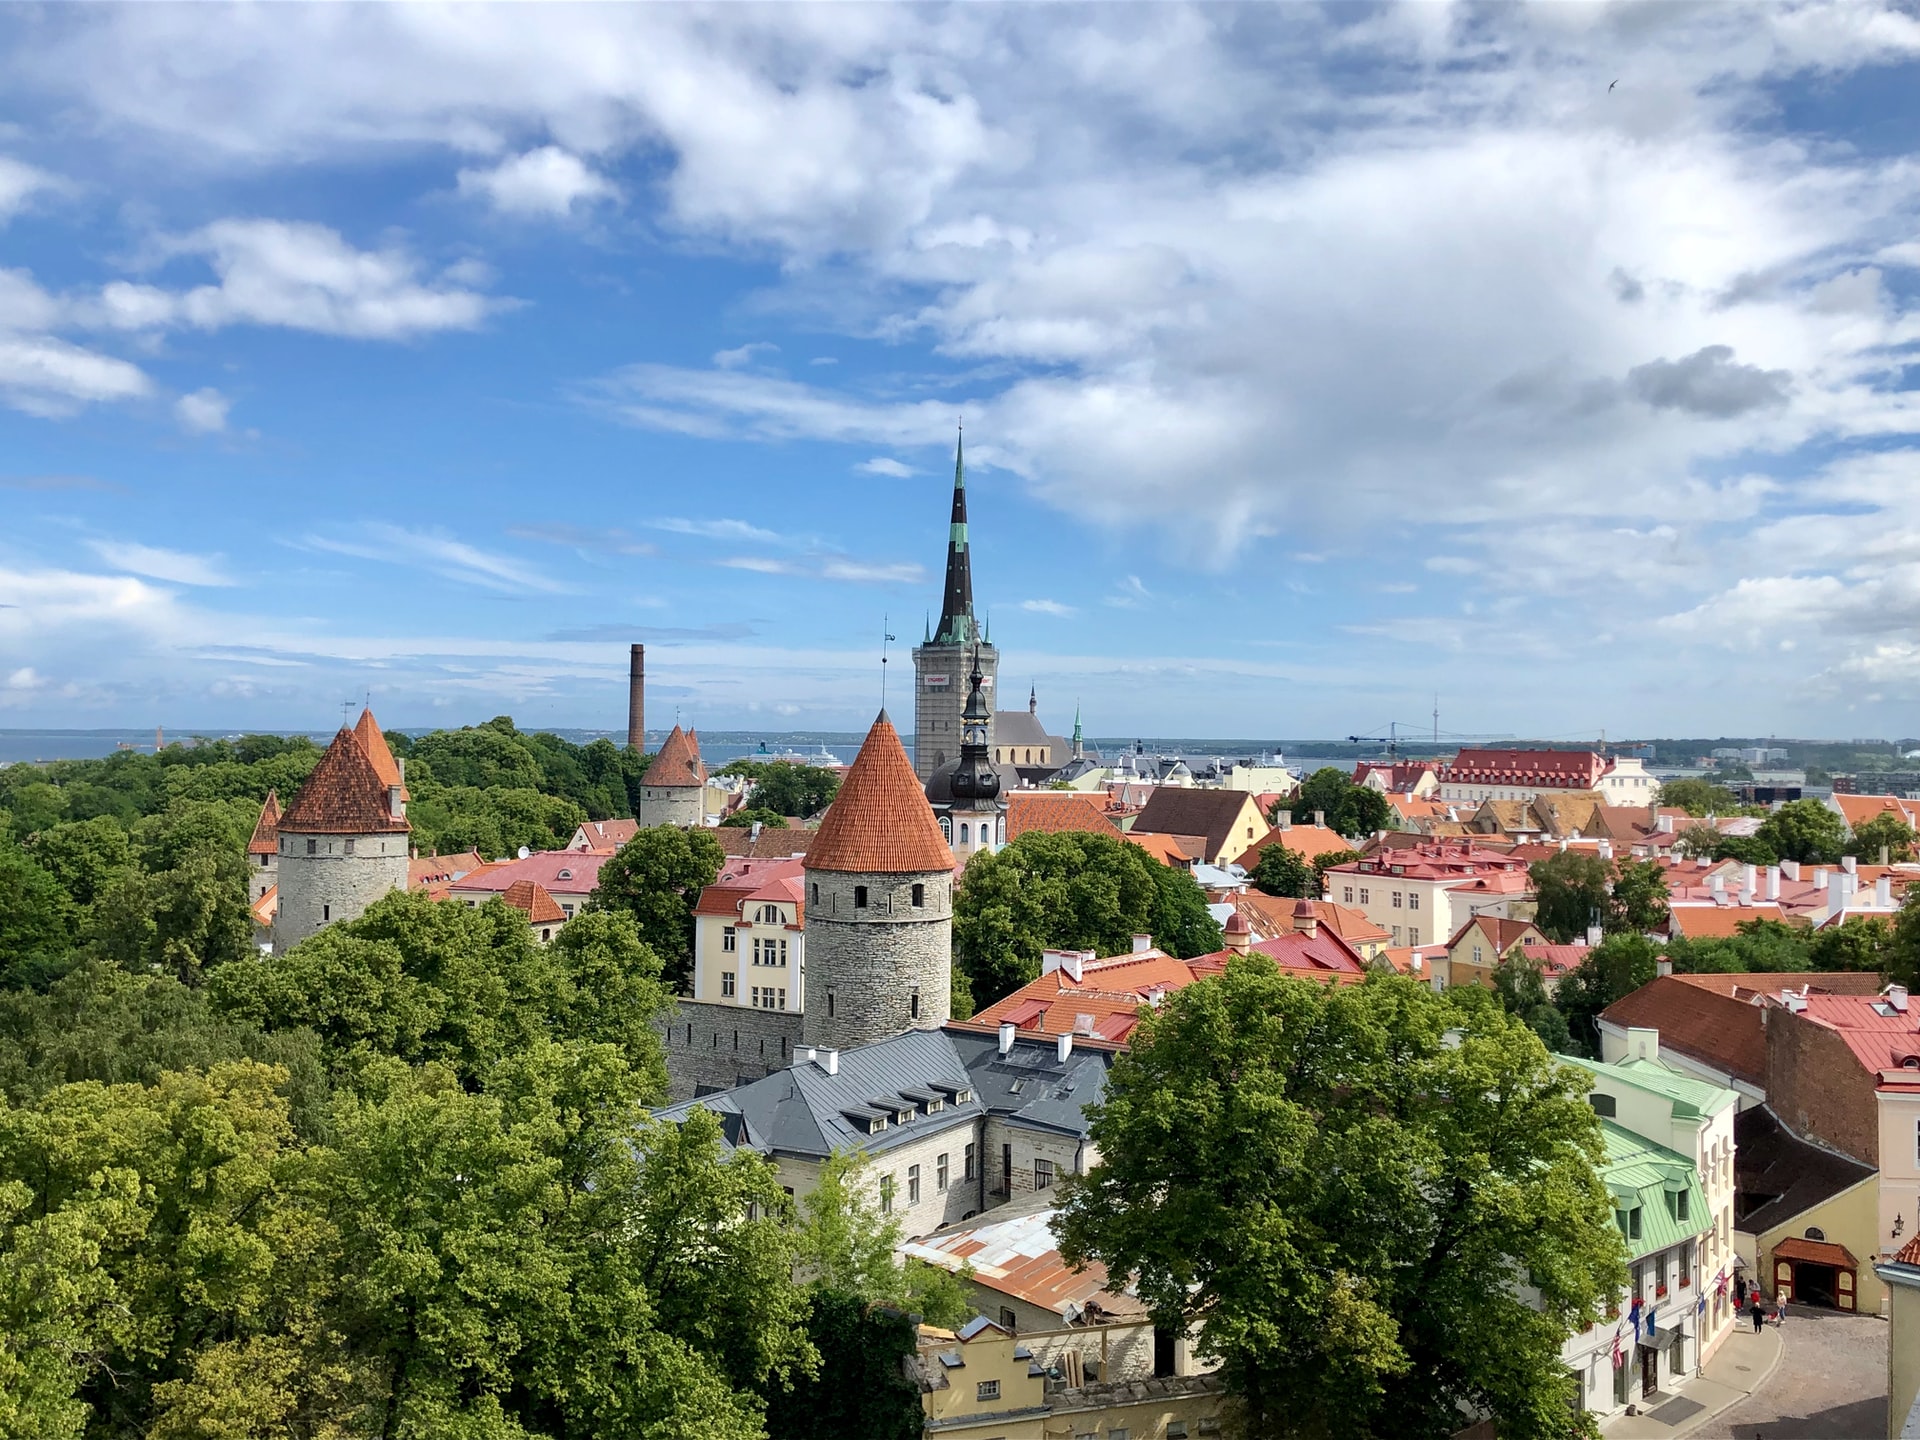 An image of Estonia